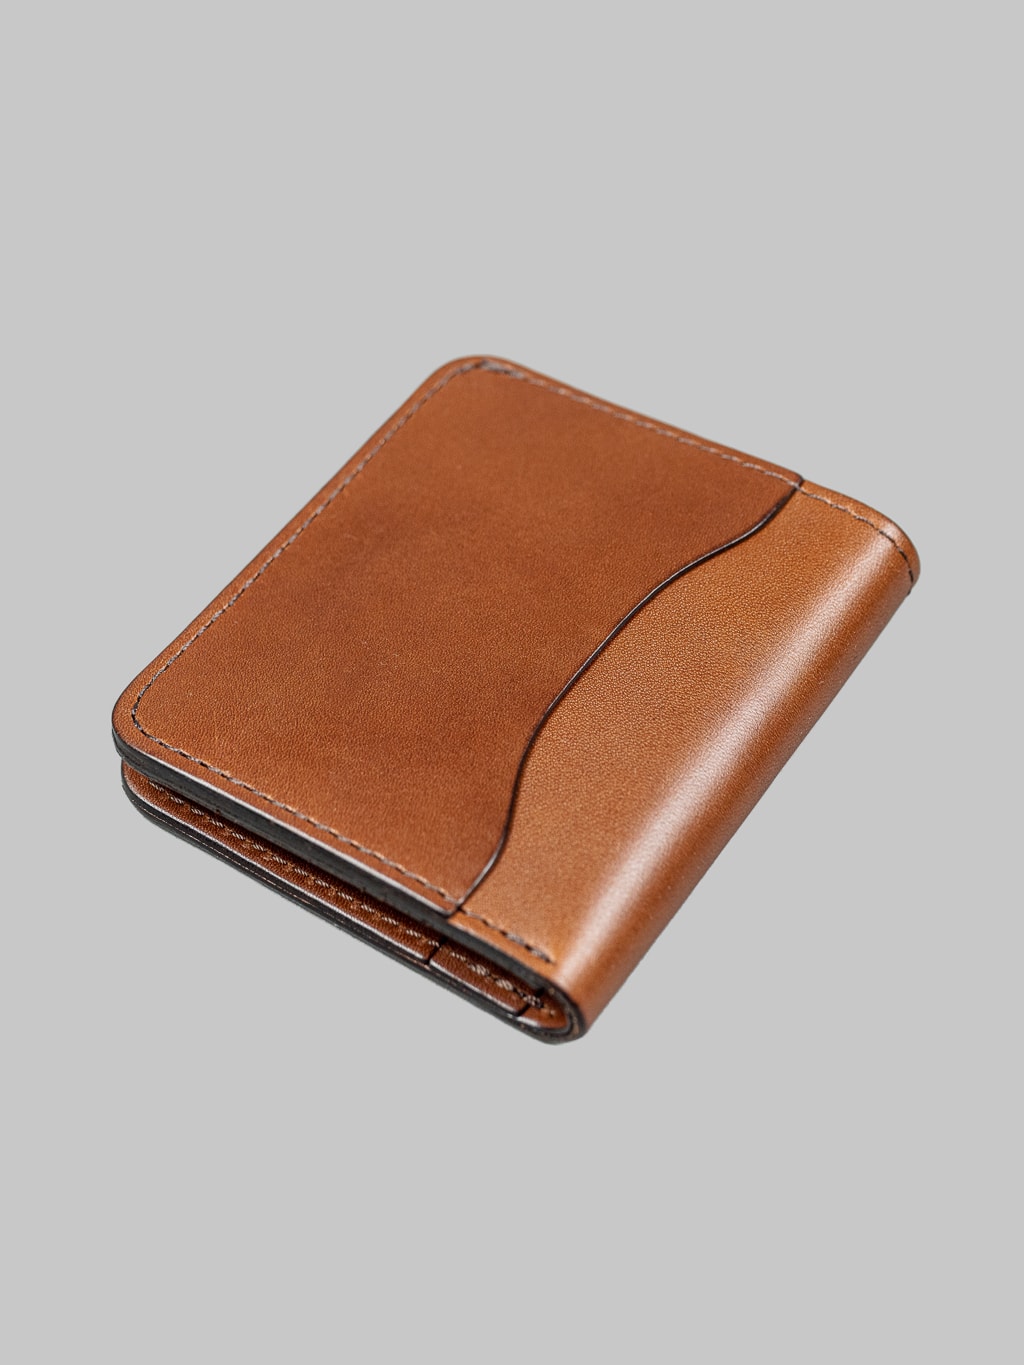 Studio Dartisan brown leather mini wallet back view